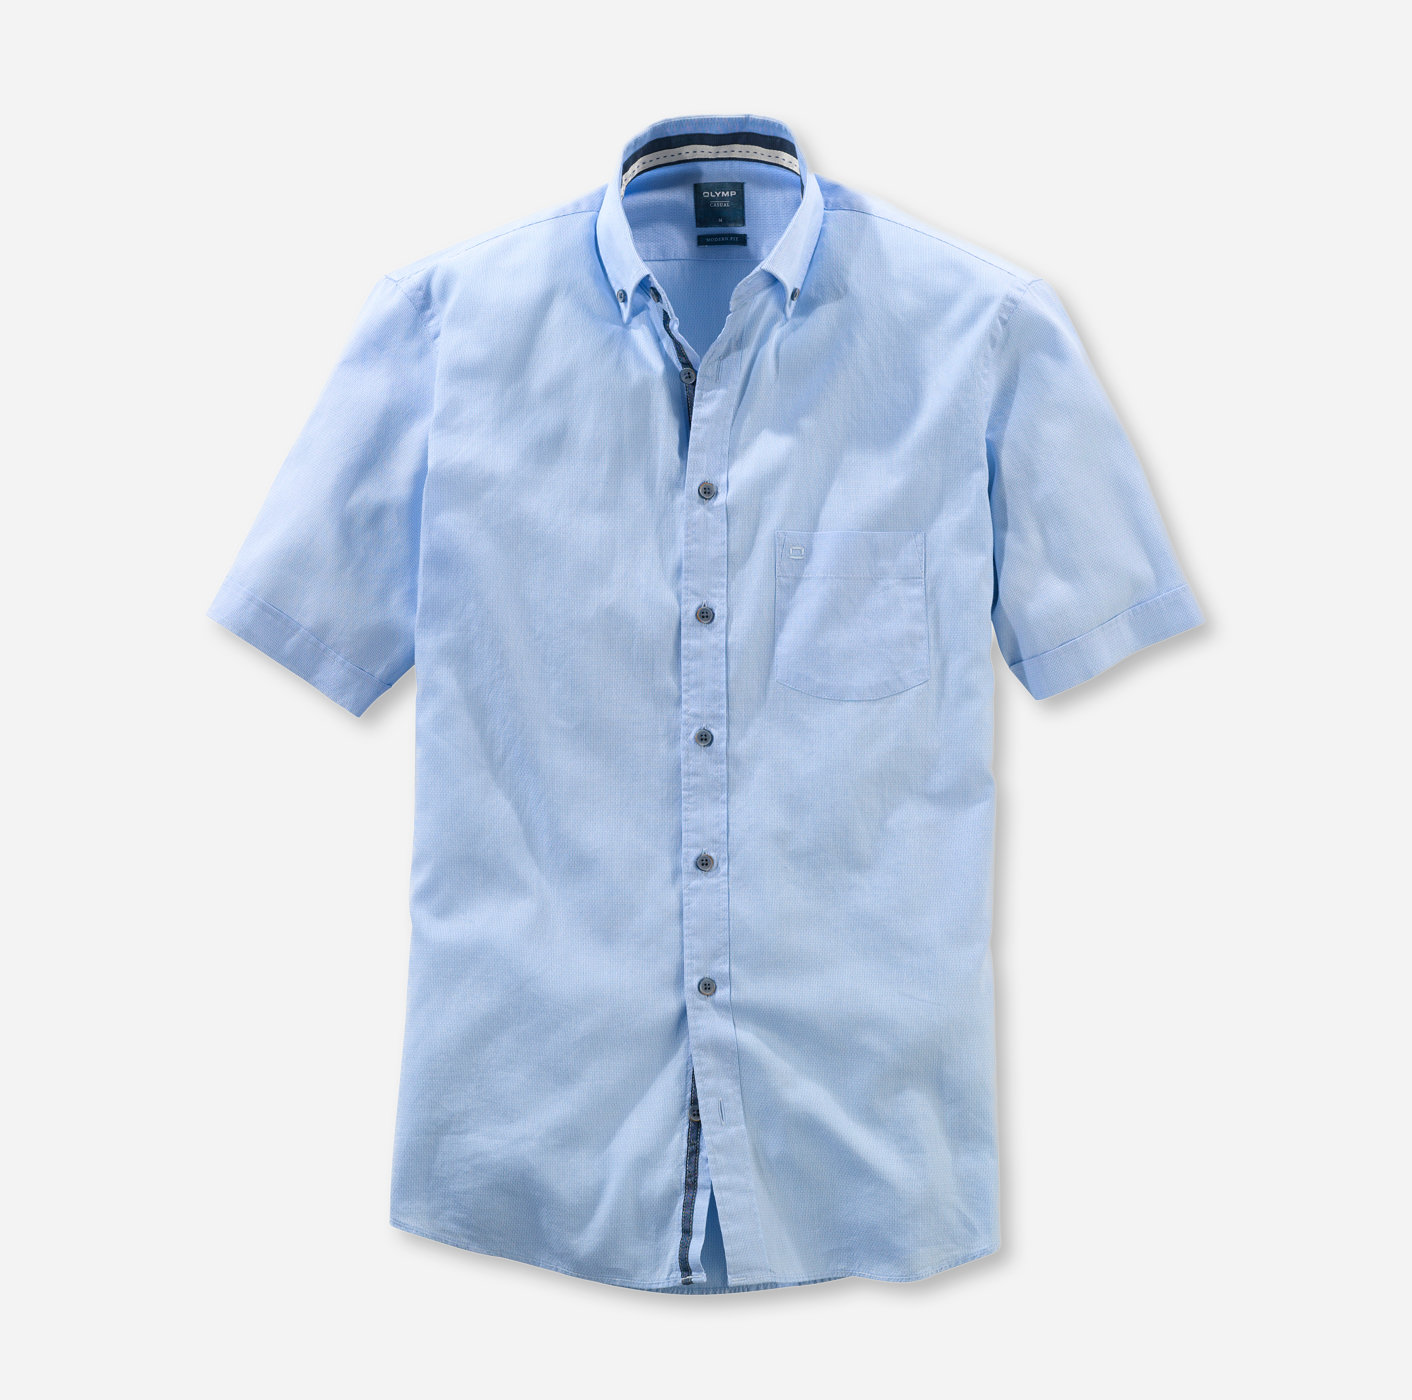 OLYMP Casual, modern fit, Freizeithemd, Button-down, Bleu